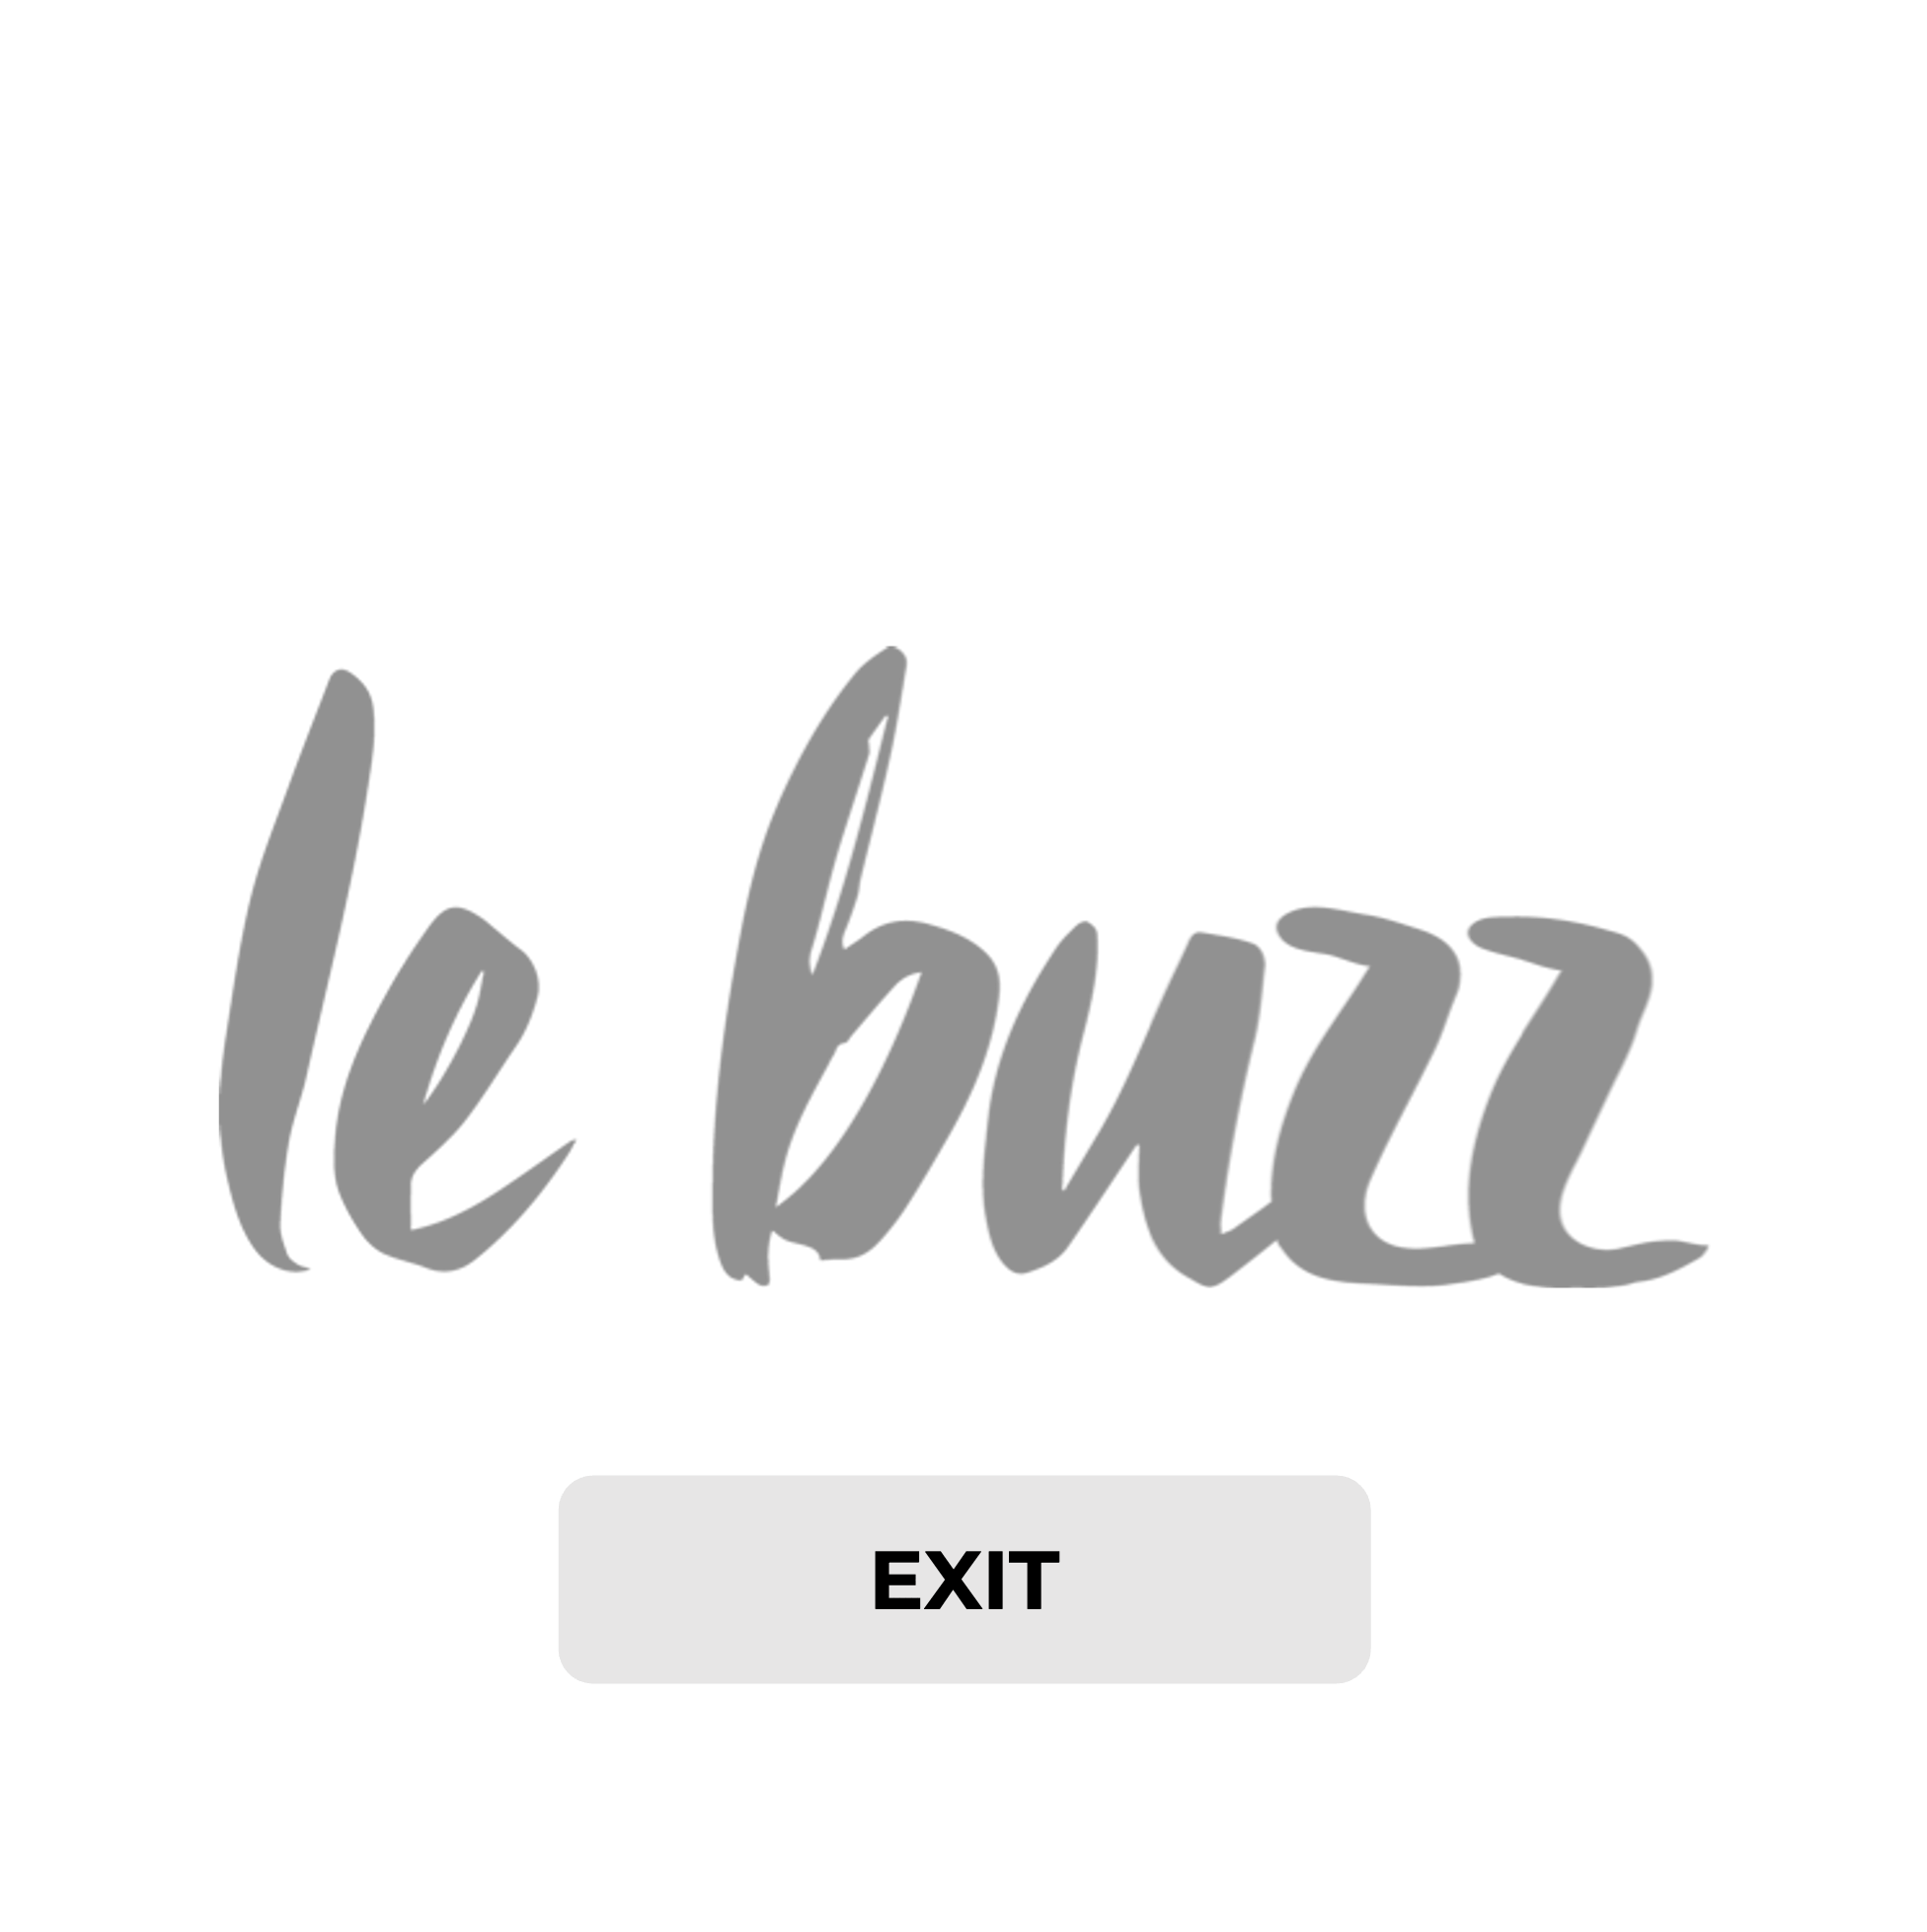 Le Buzz Logo Exit